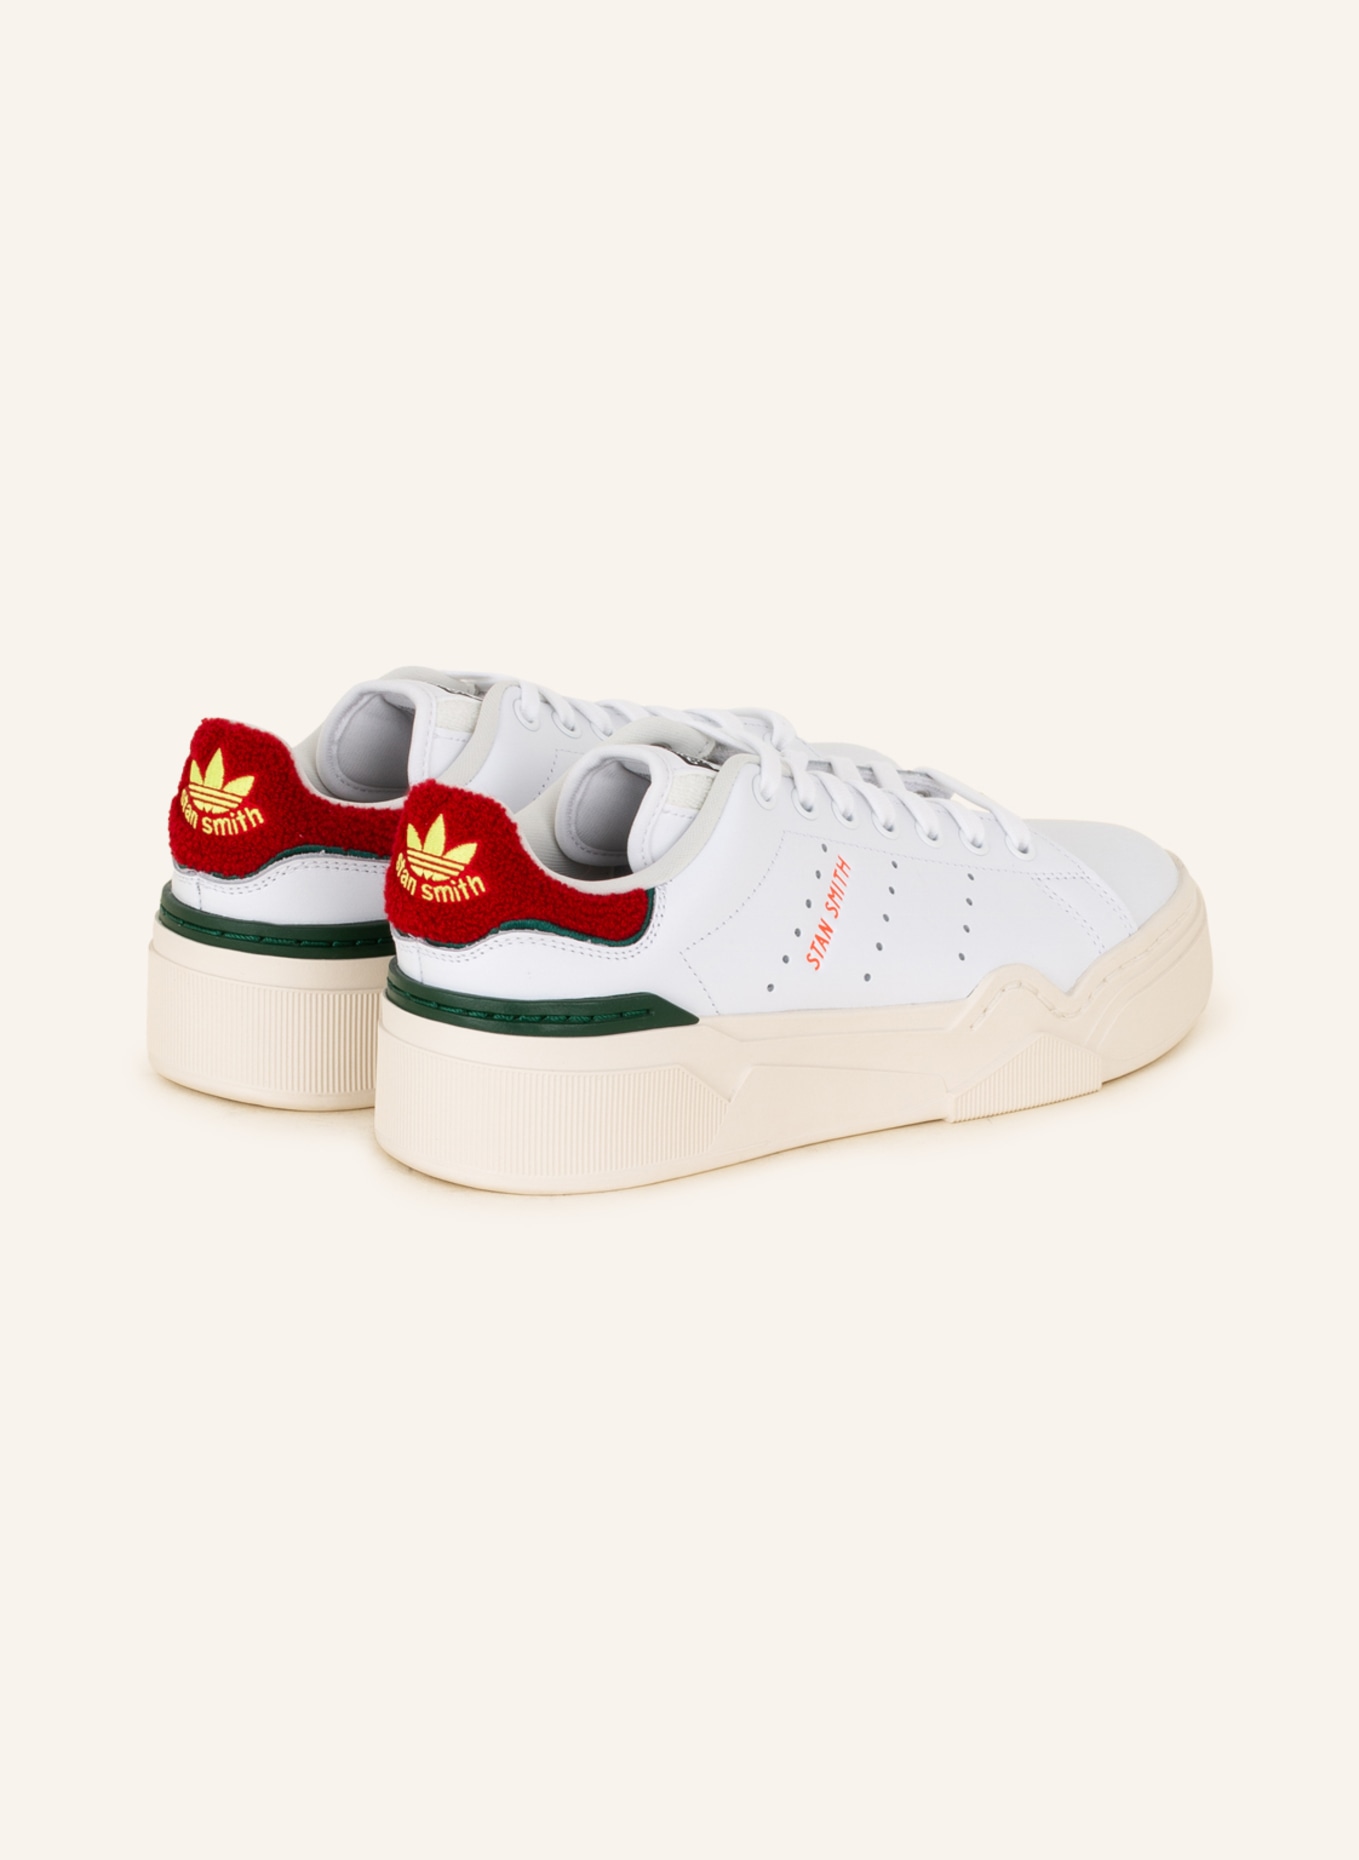 adidas Originals Stan Smith Bonega 2B platform sneakers in white and red